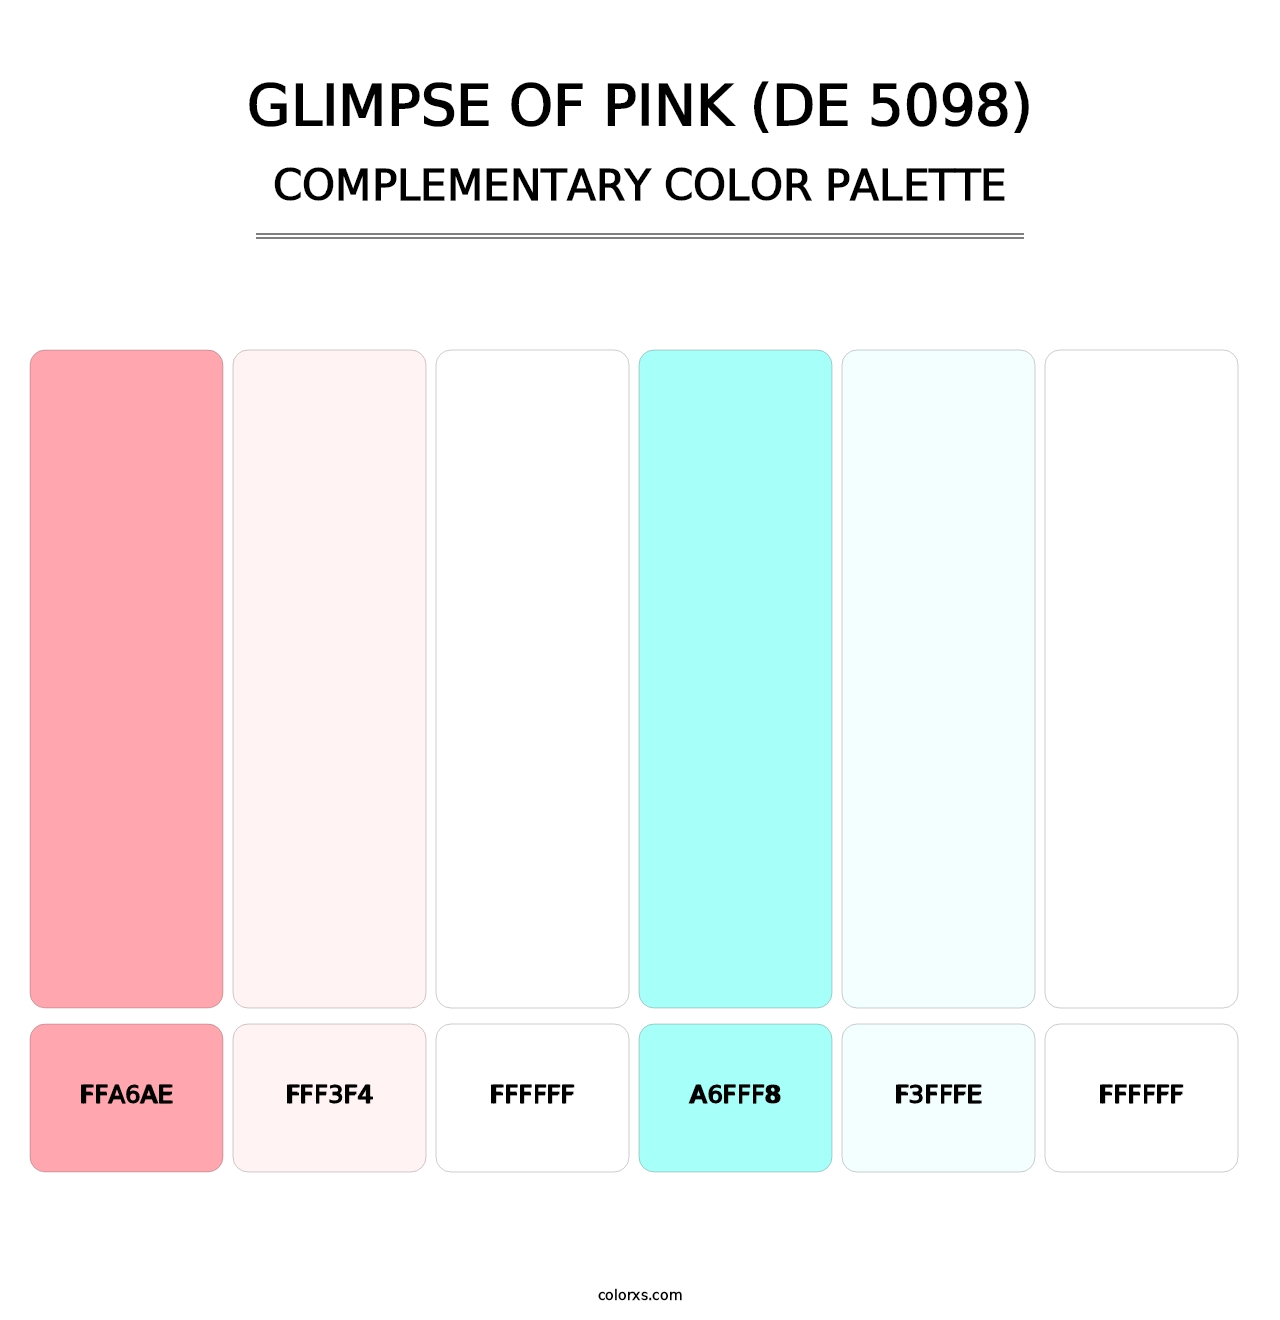 Glimpse of Pink (DE 5098) - Complementary Color Palette